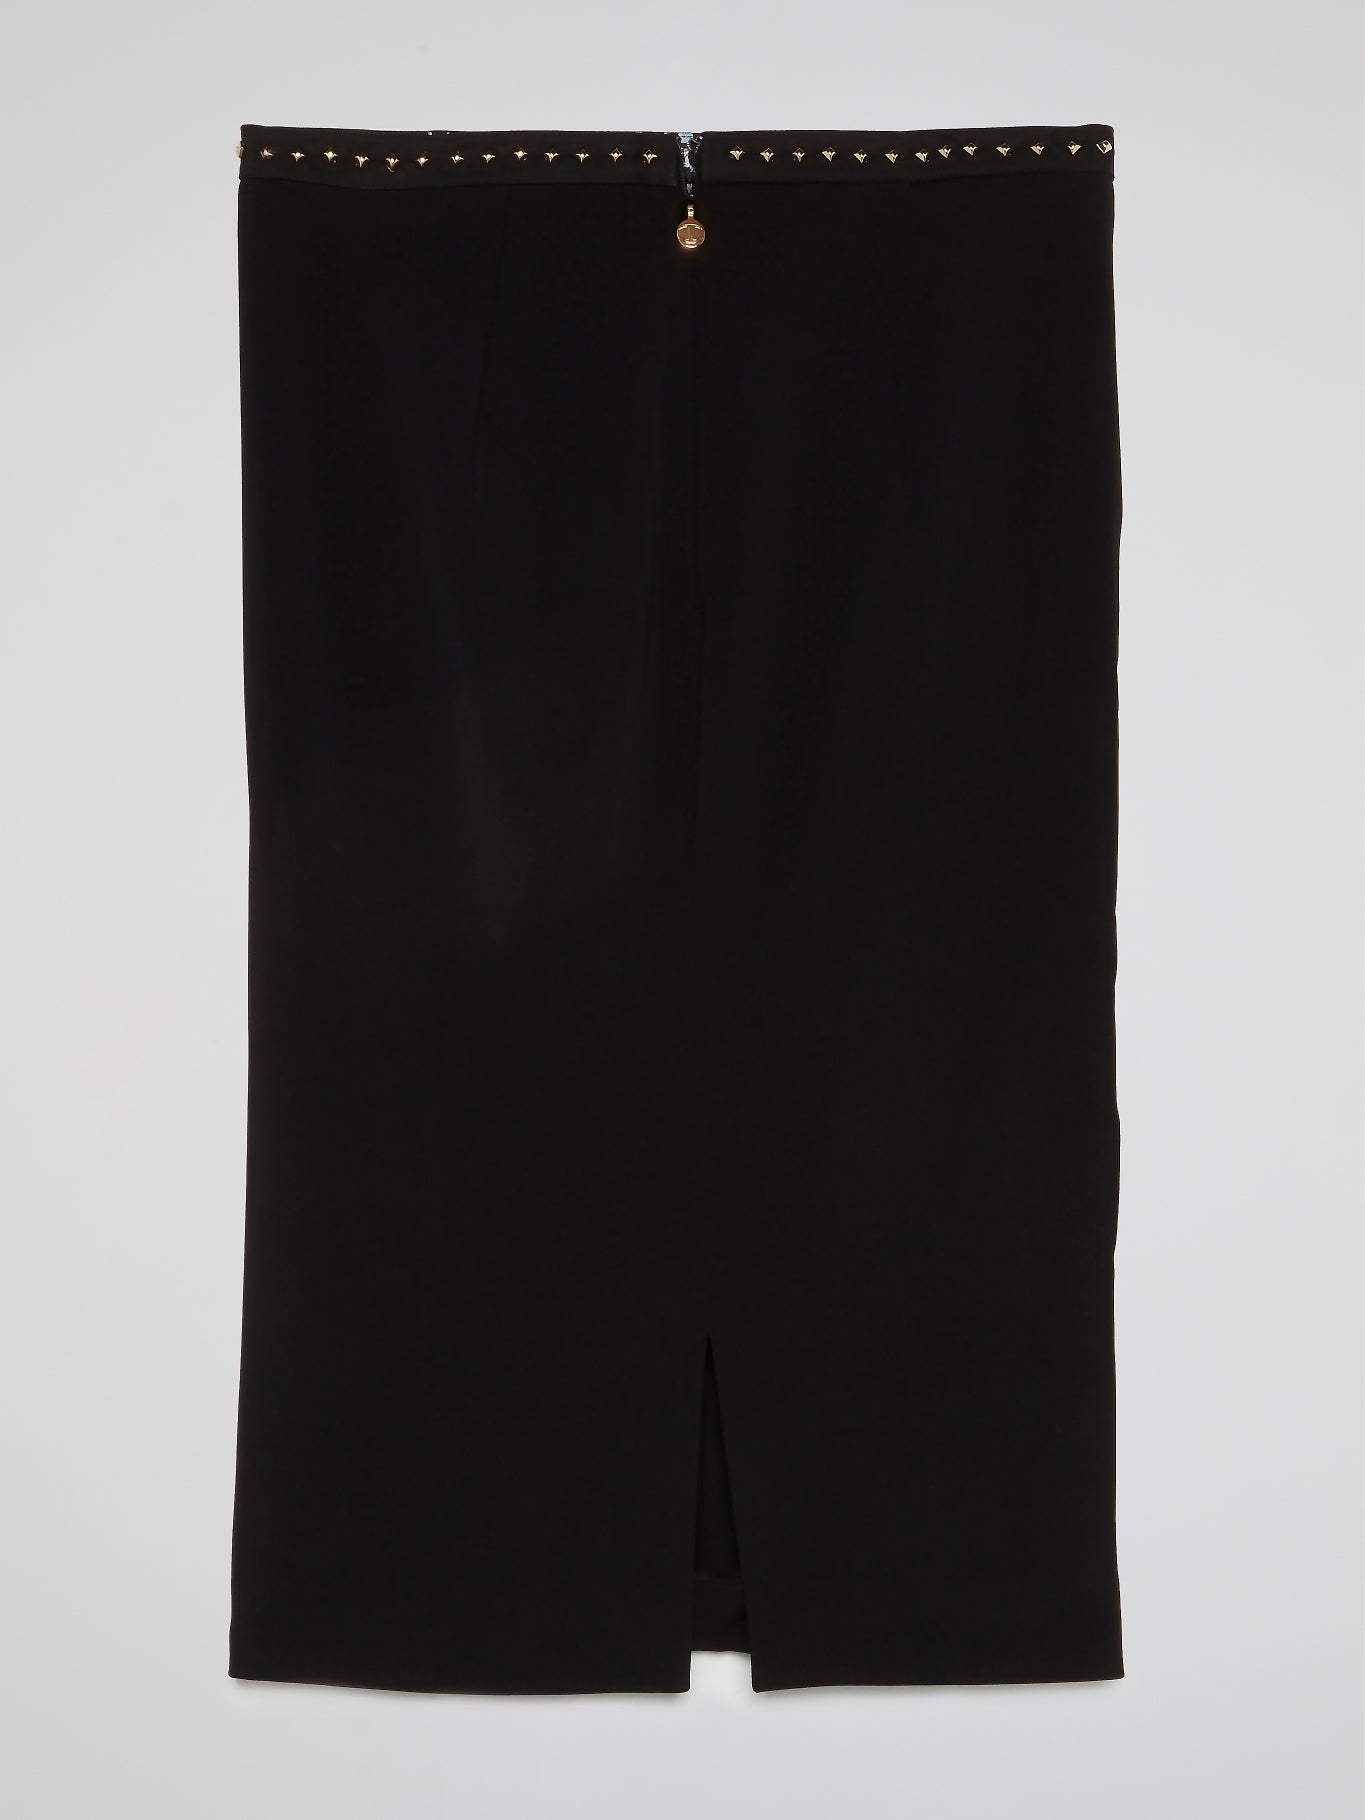 Black Studded Pencil Skirt